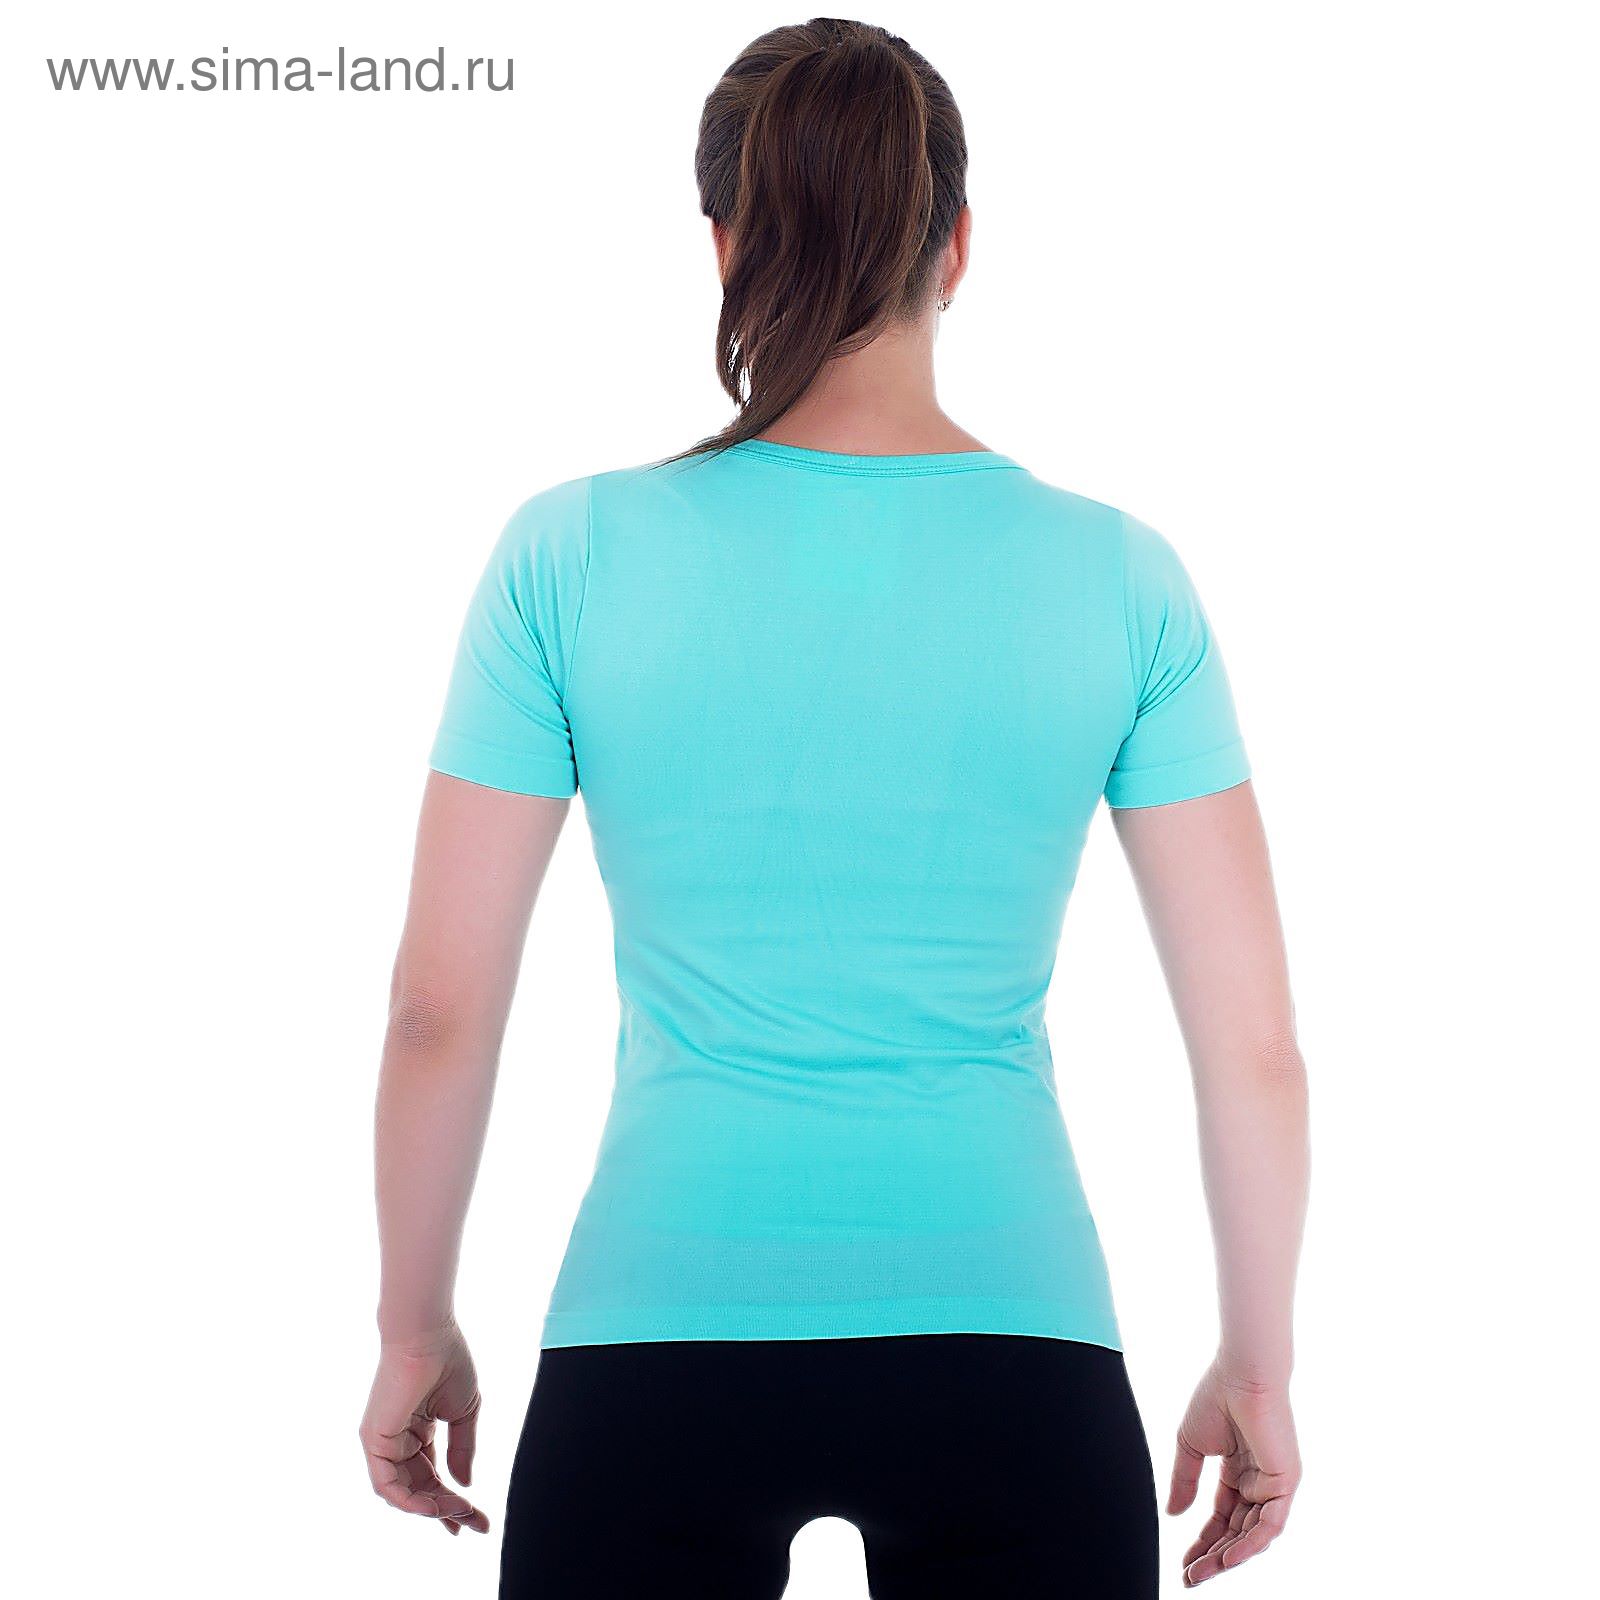 Спортивная футболка ONLITOP Balance mint, размер S-M (42-44)